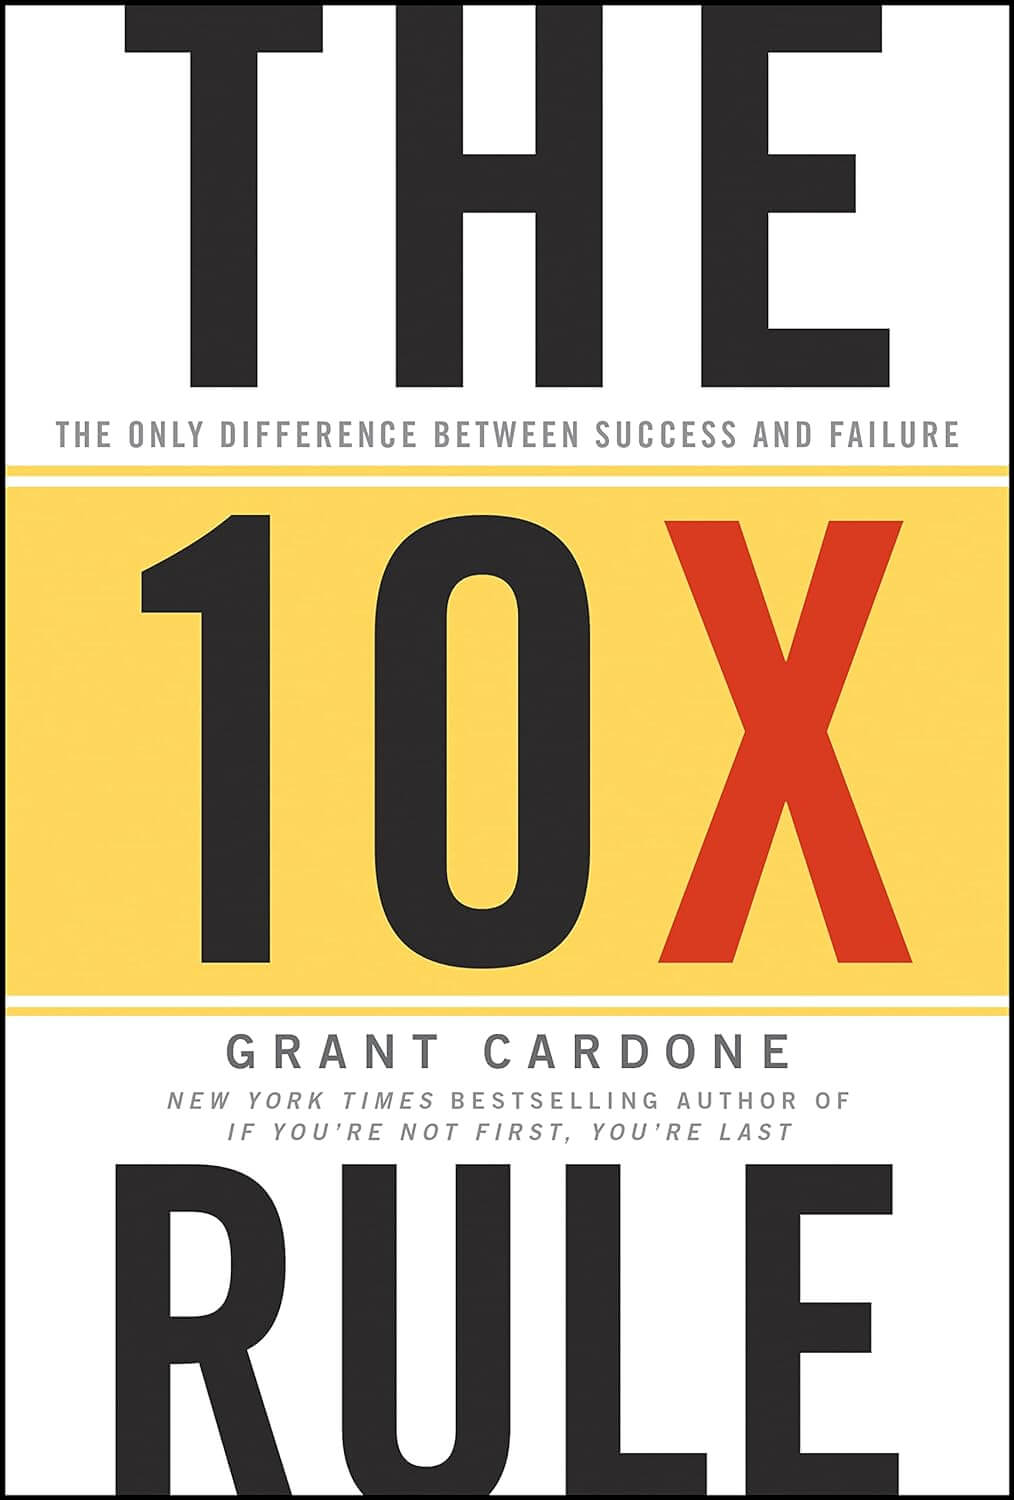 2. Grant Cardone - 'The 10X Rule' 🚀